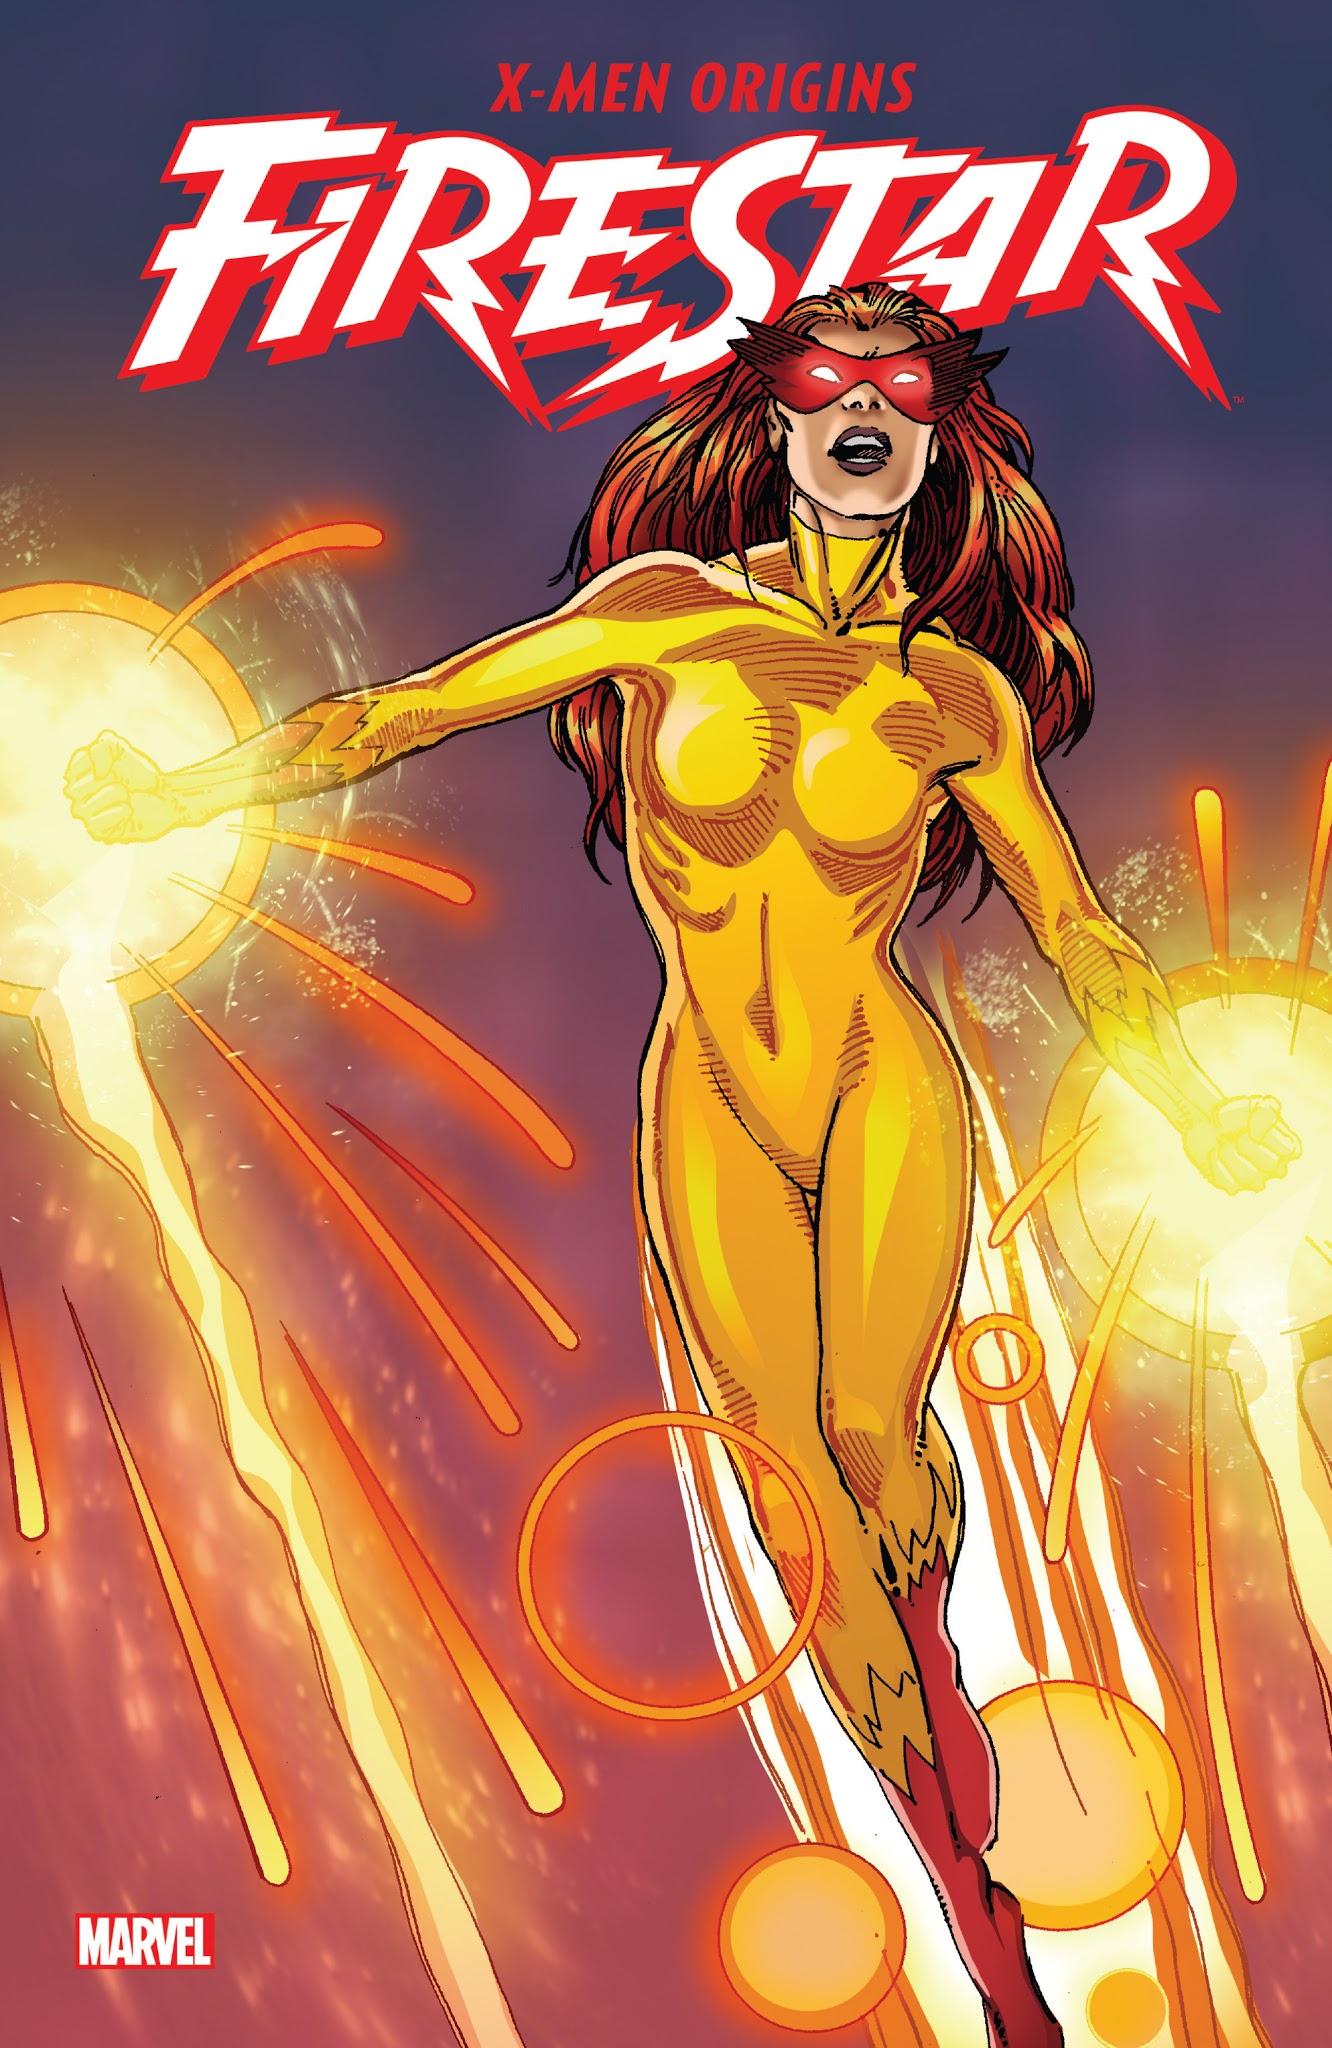 Read online X-Men Origins: Firestar comic -  Issue # TPB - 1